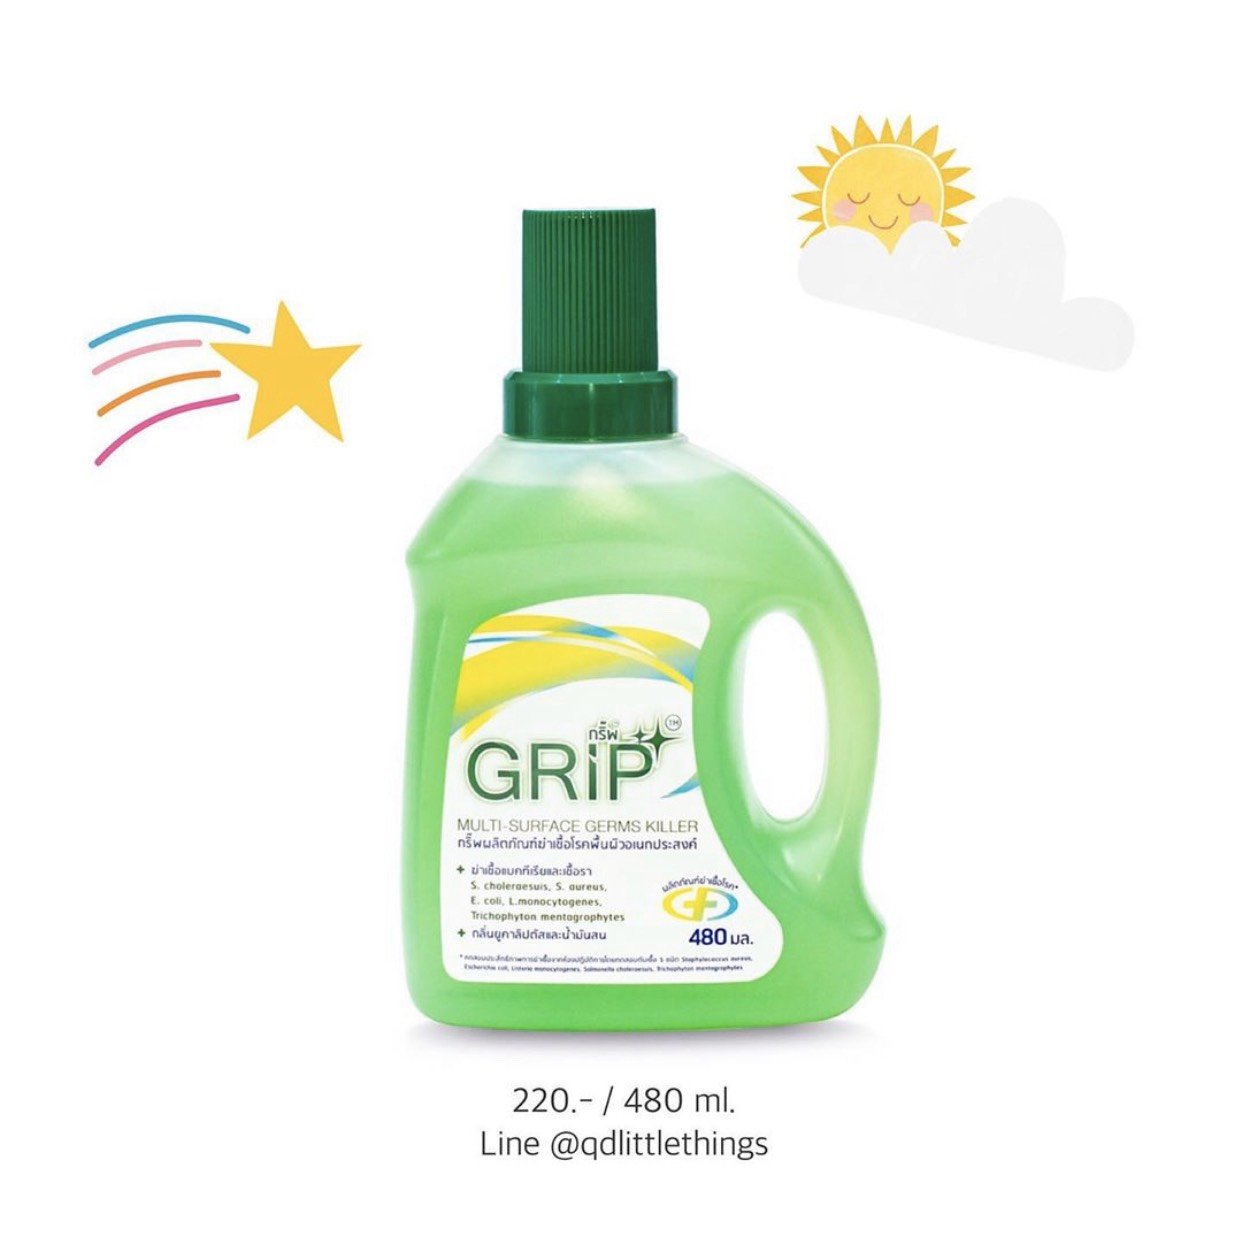 KitGrip - Multi Surface Germs Killer ( 480ml )